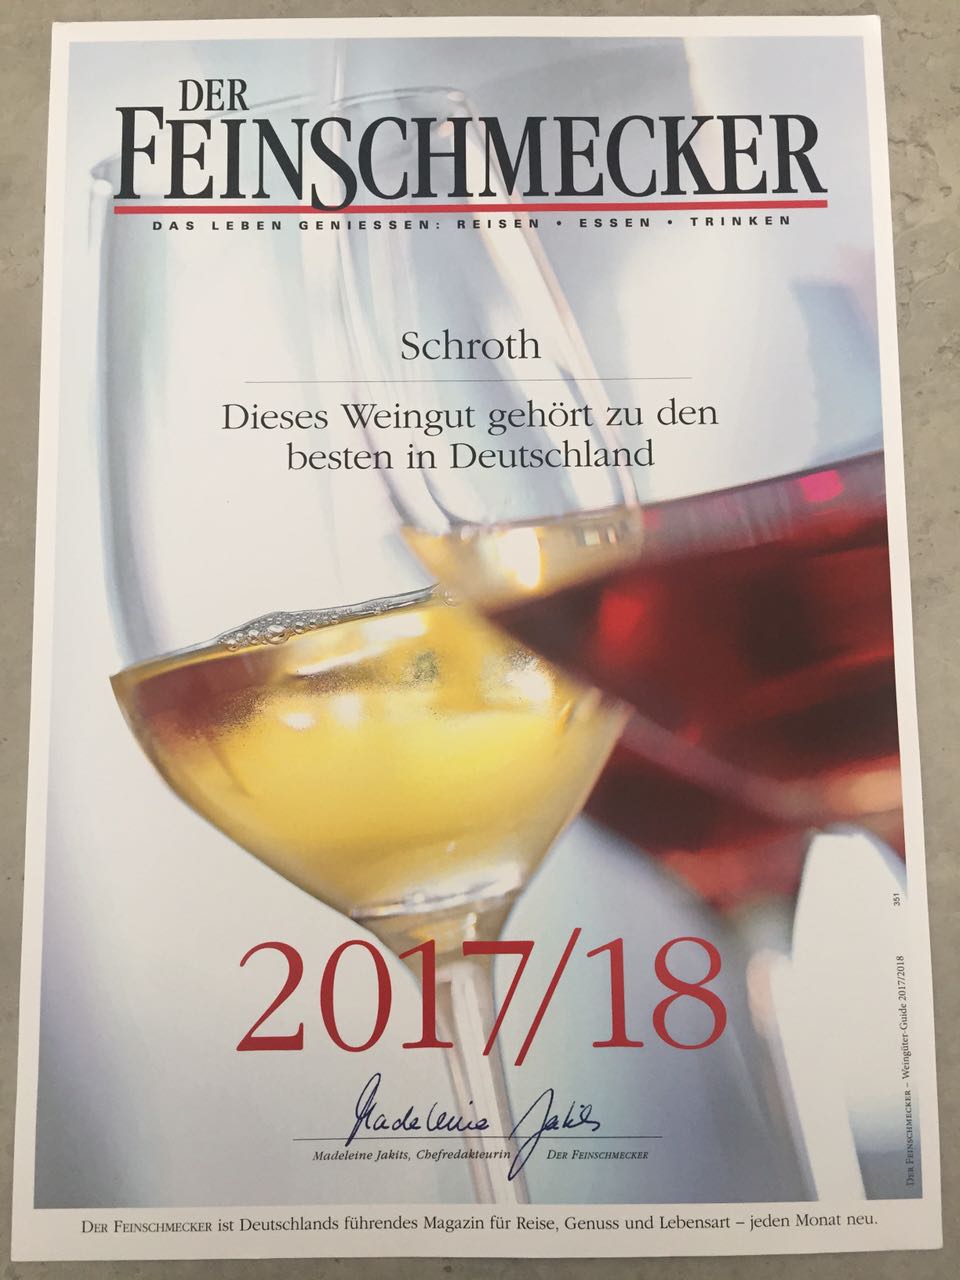 Feinschmecker Urkunde 2017/18